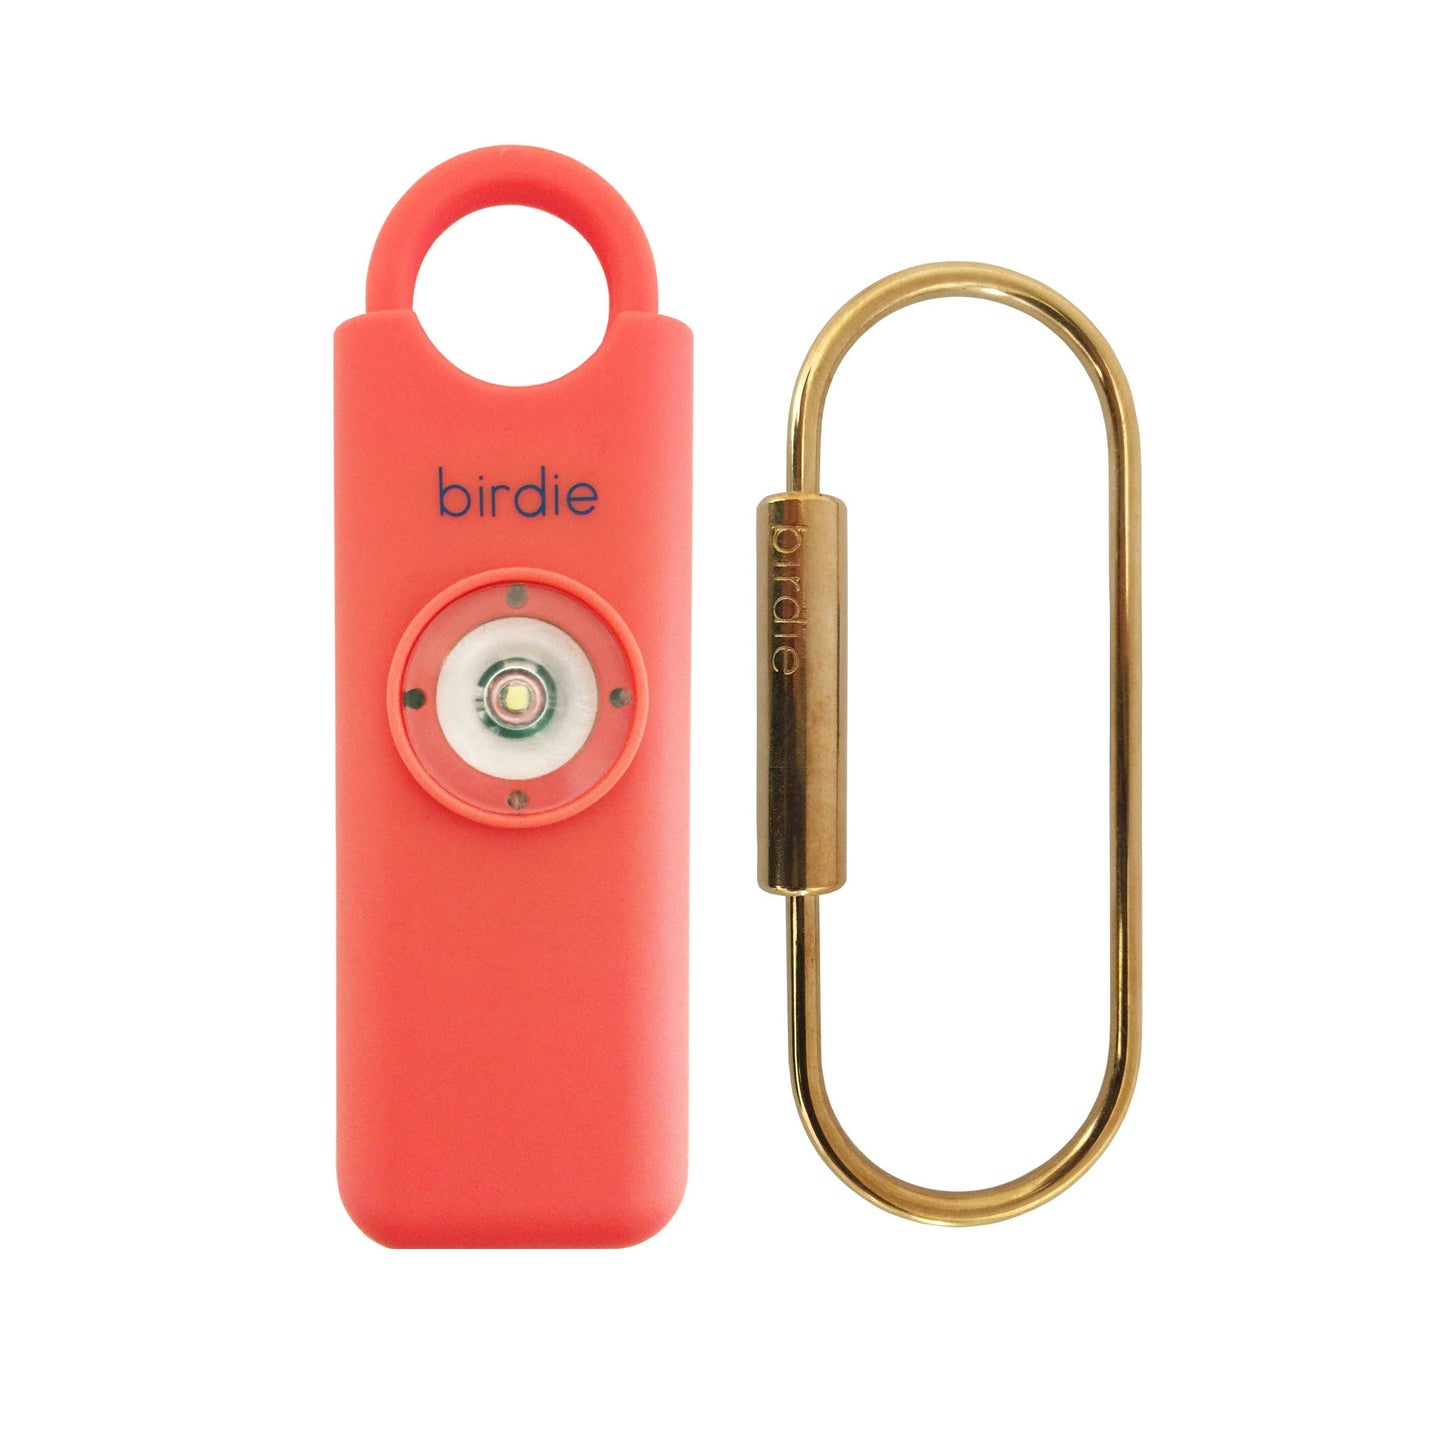 She's Birdie - She's Birdie Personal Safety Alarm: Single / Coconut